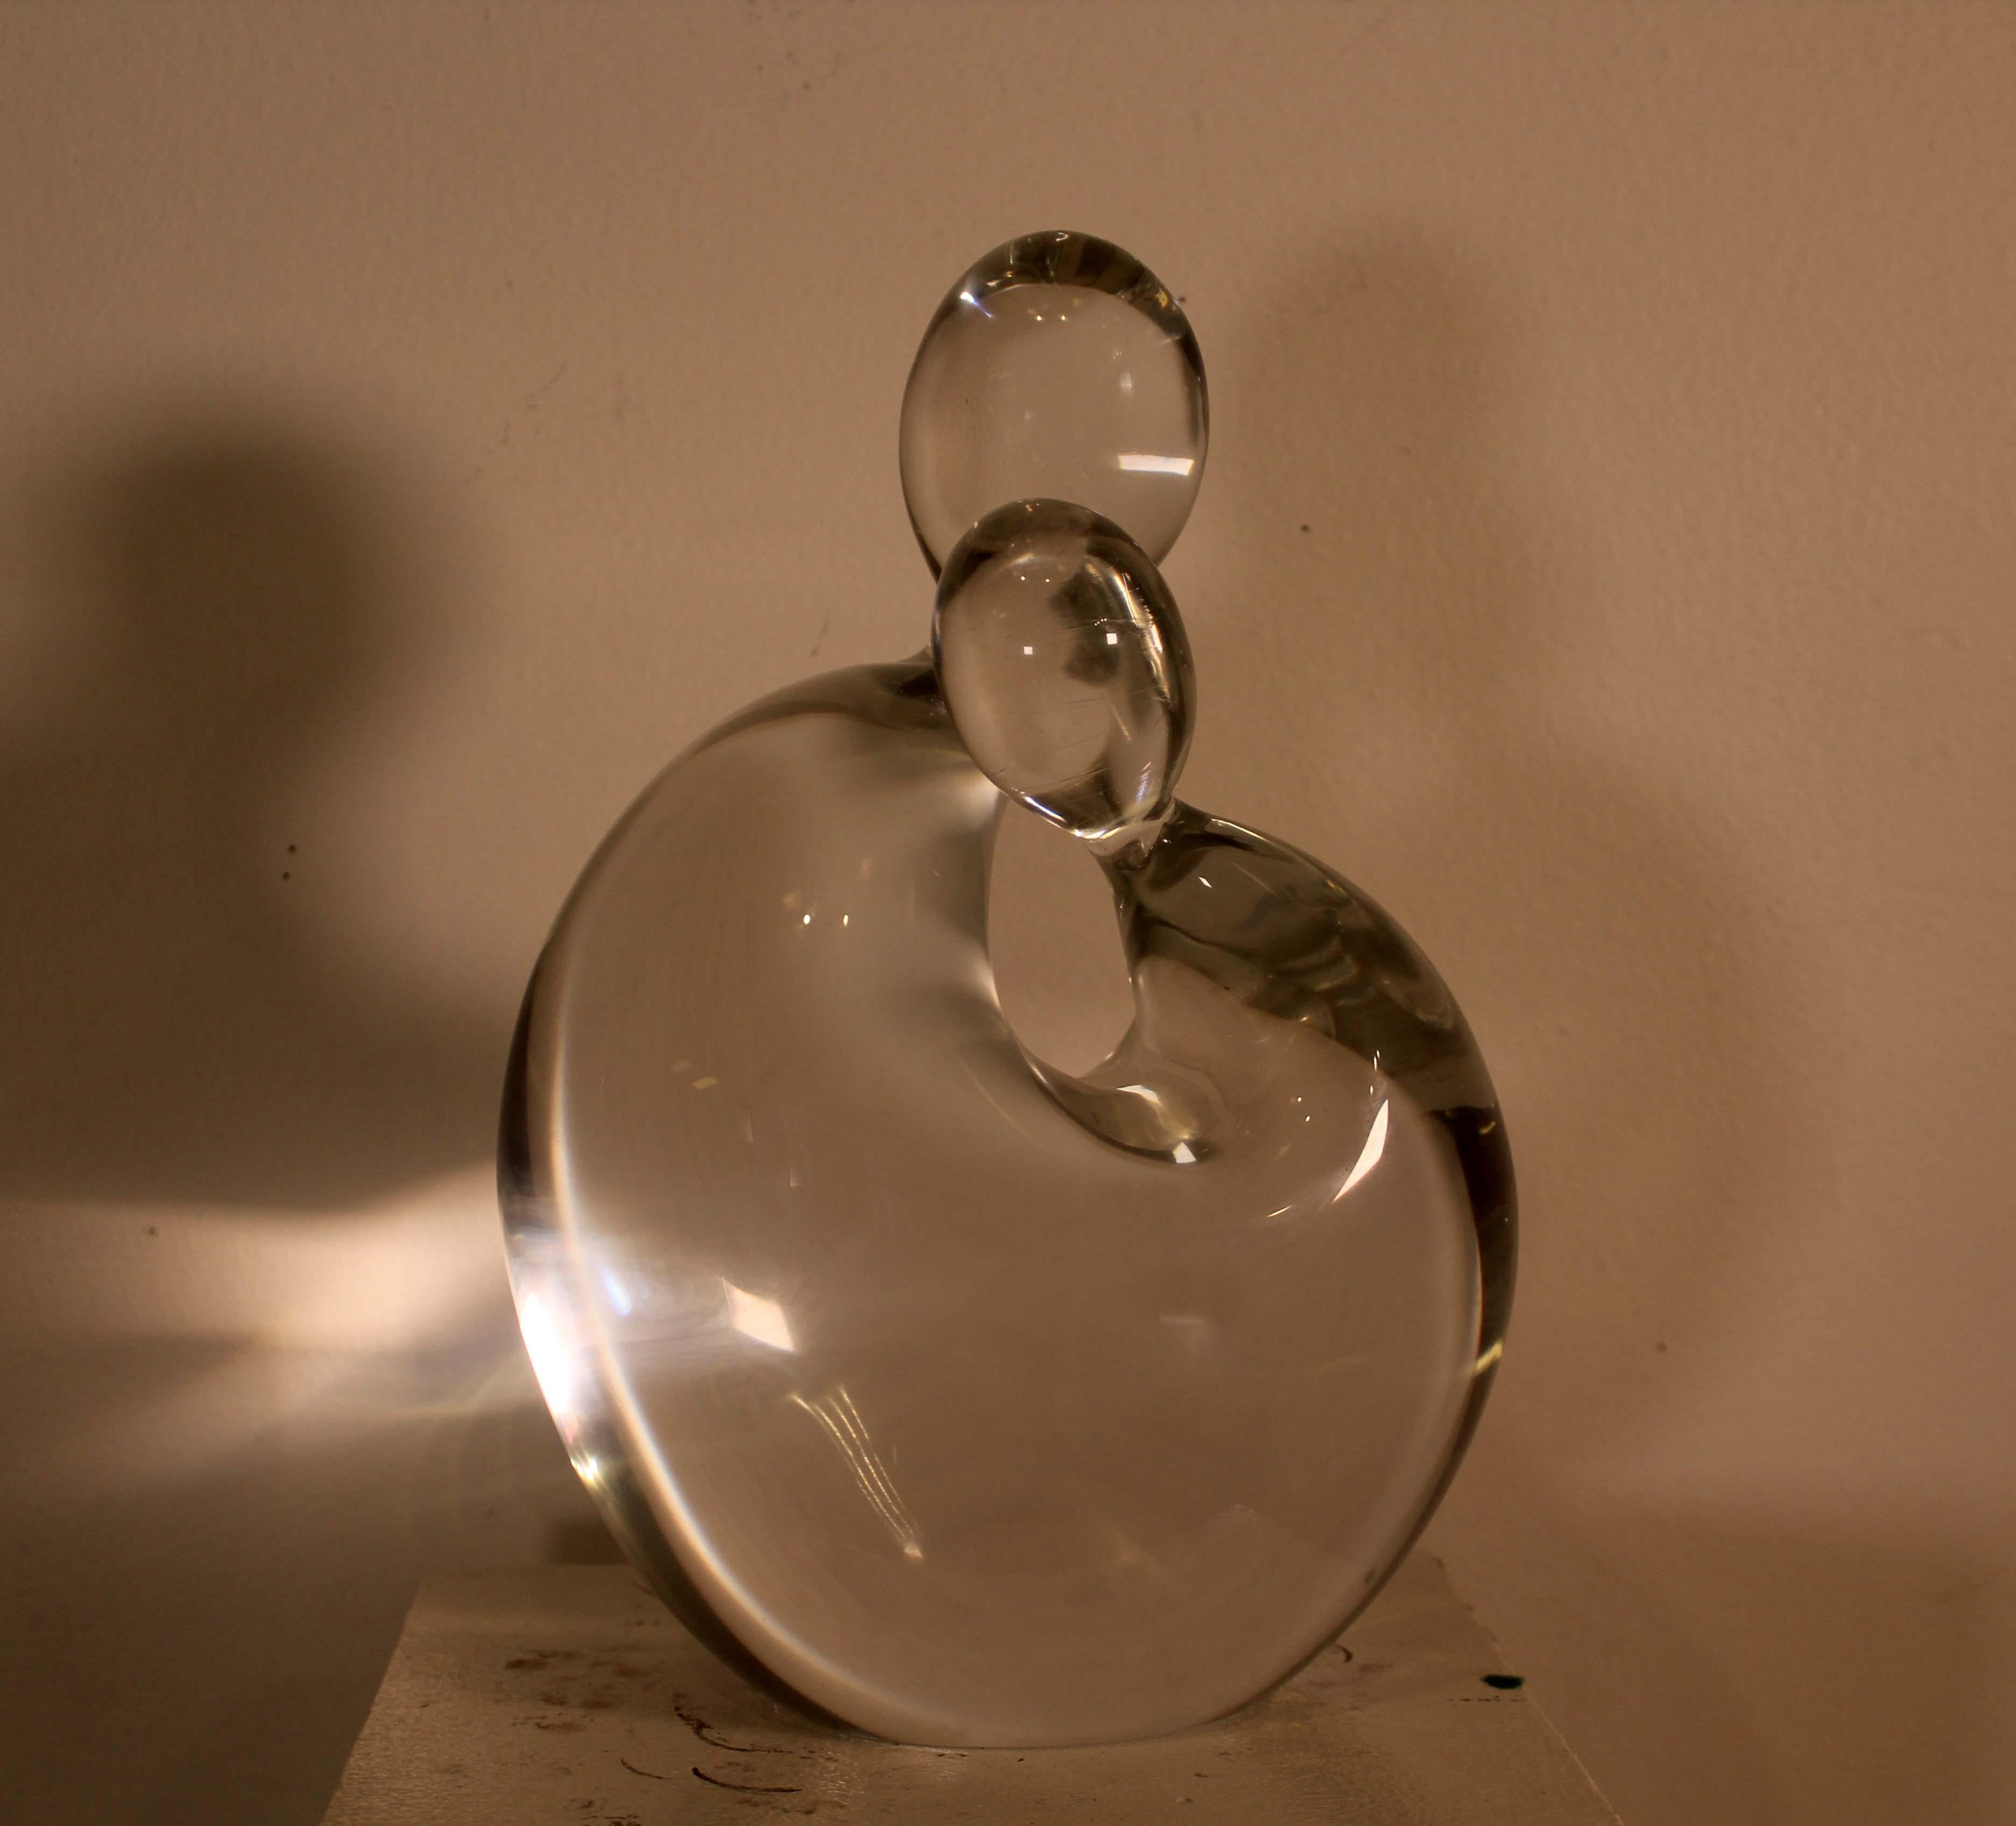 2 Figure glass sculpture by Venetian artist Livio Seguso. In excellent condition. Dimensions: 7.5